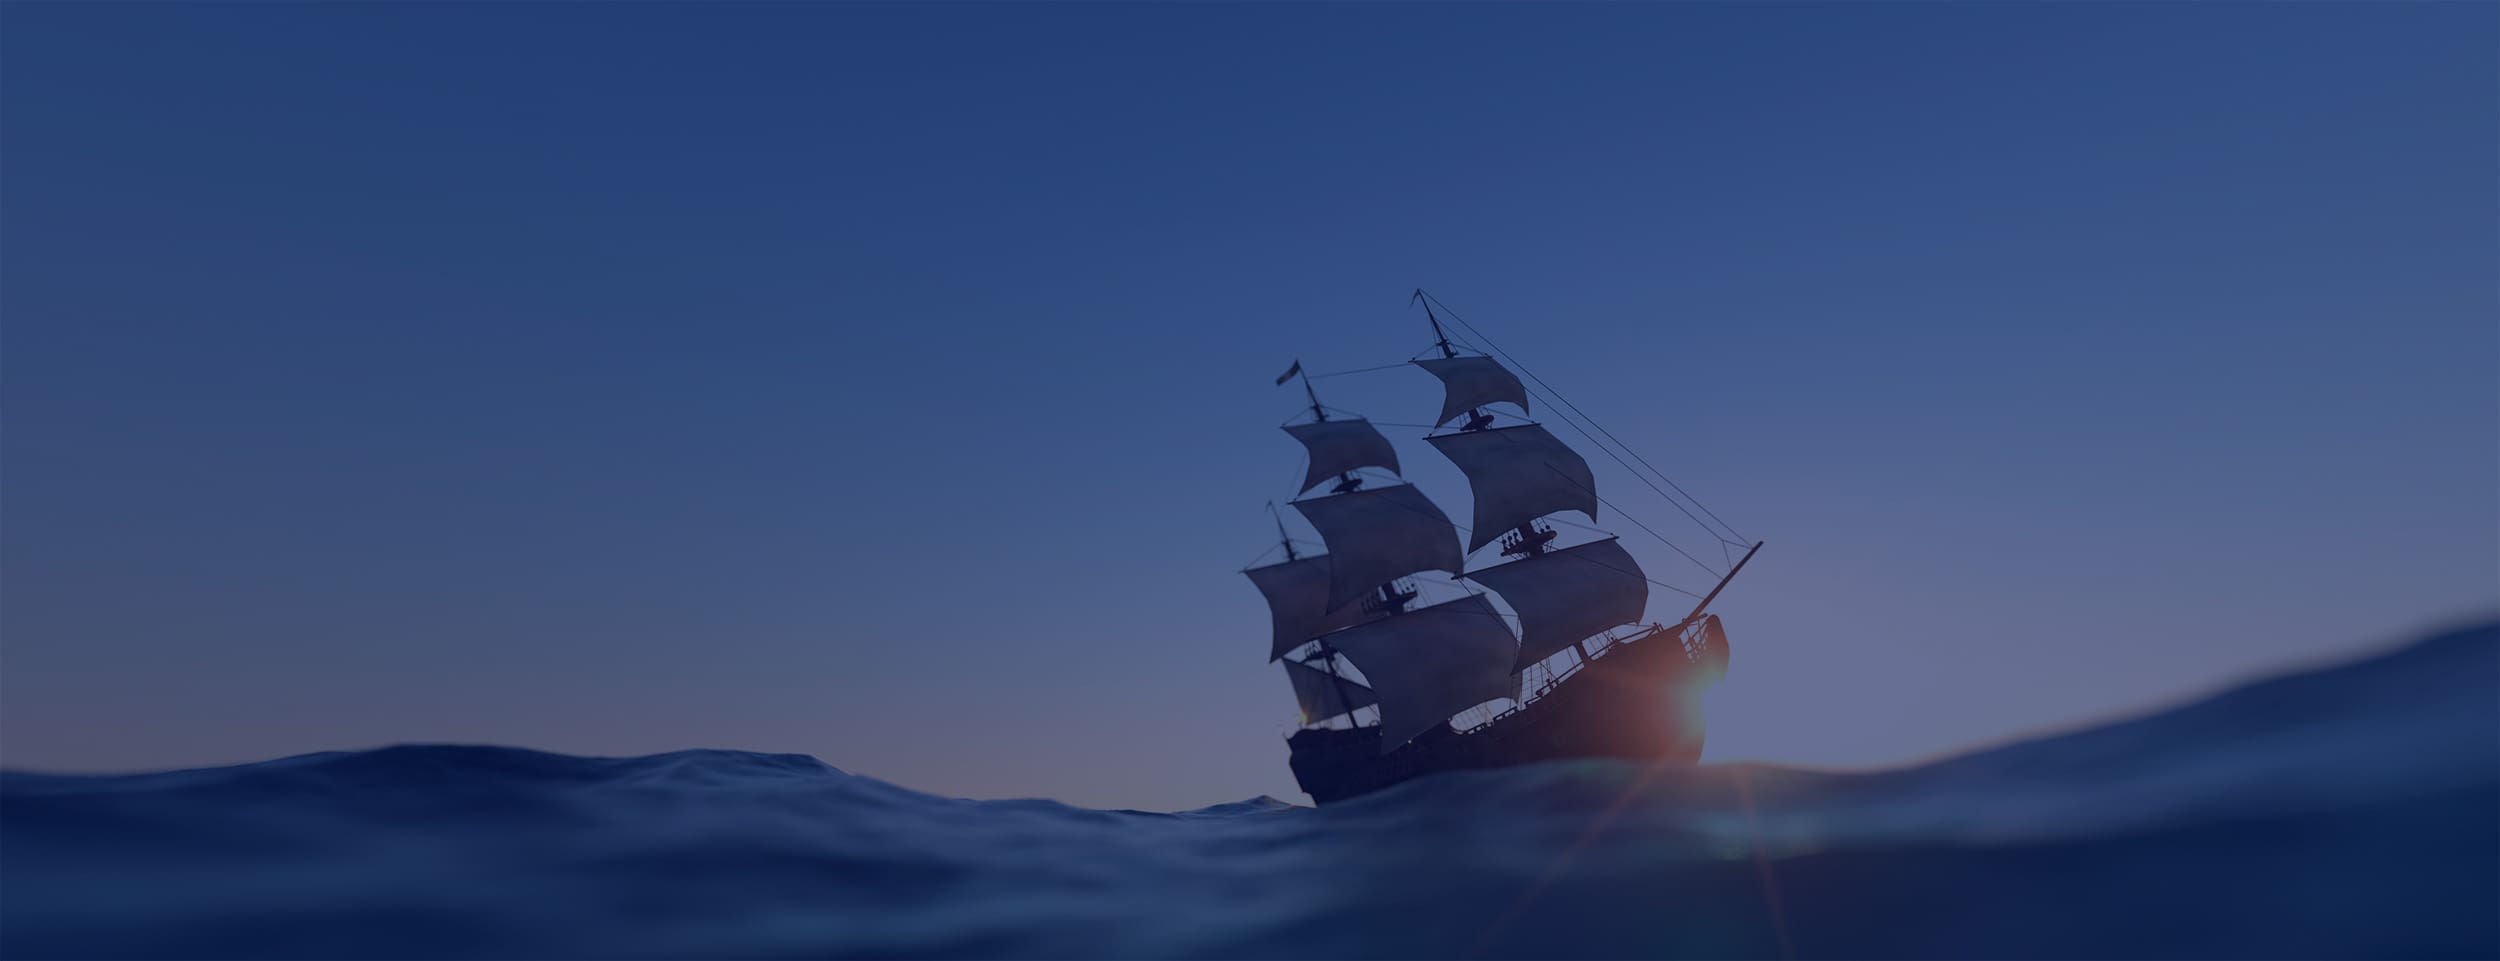 Sailing ship on ocean